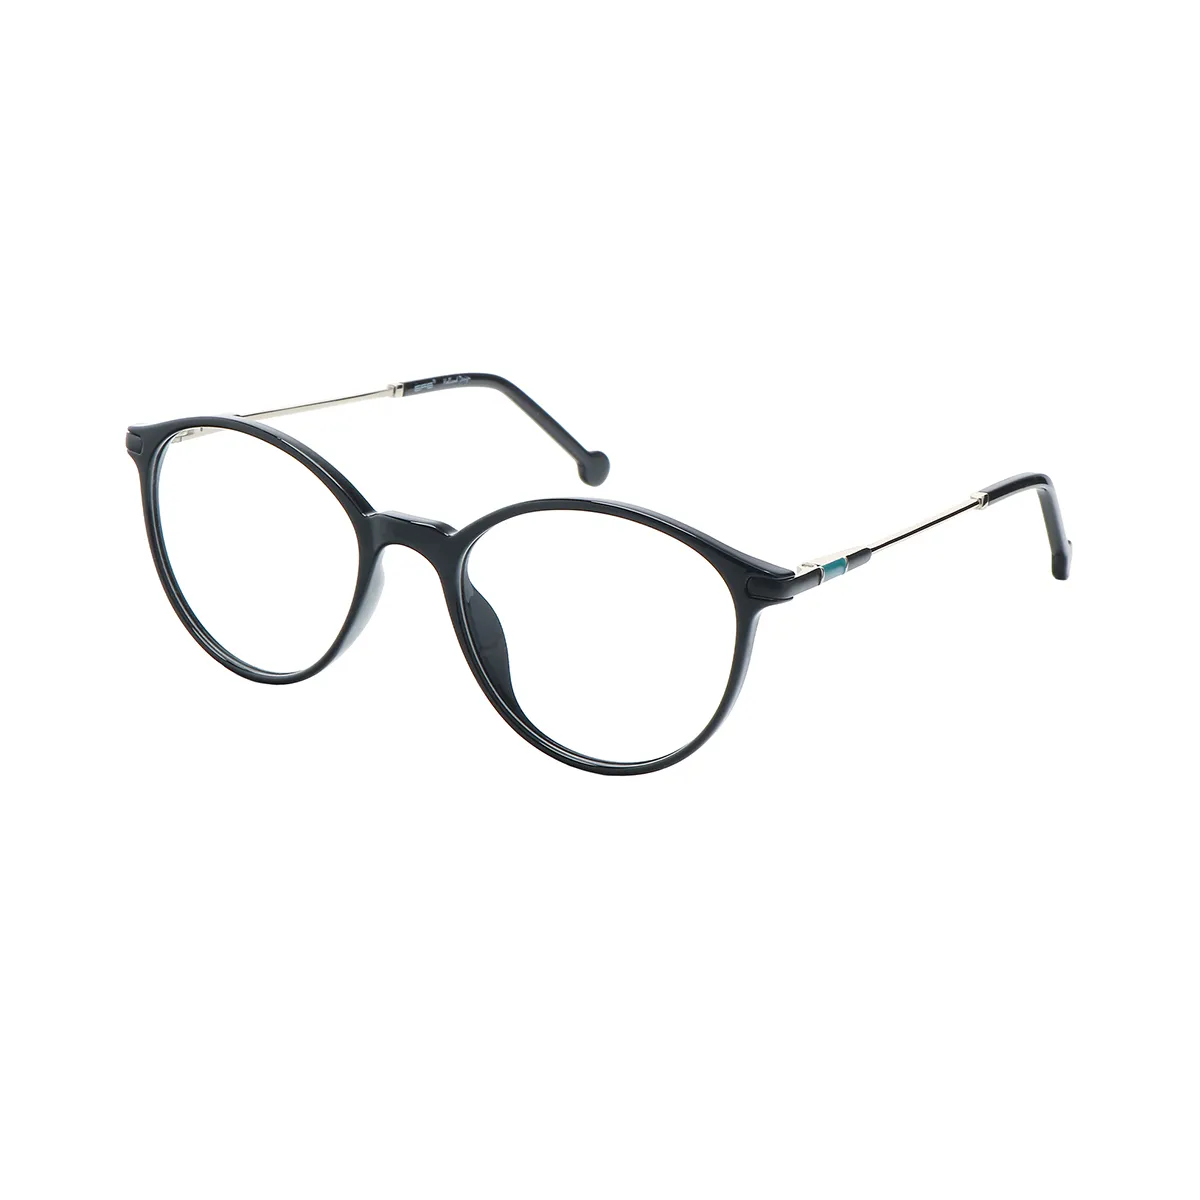 Fashion Oval Blue Eyeglasses for Women